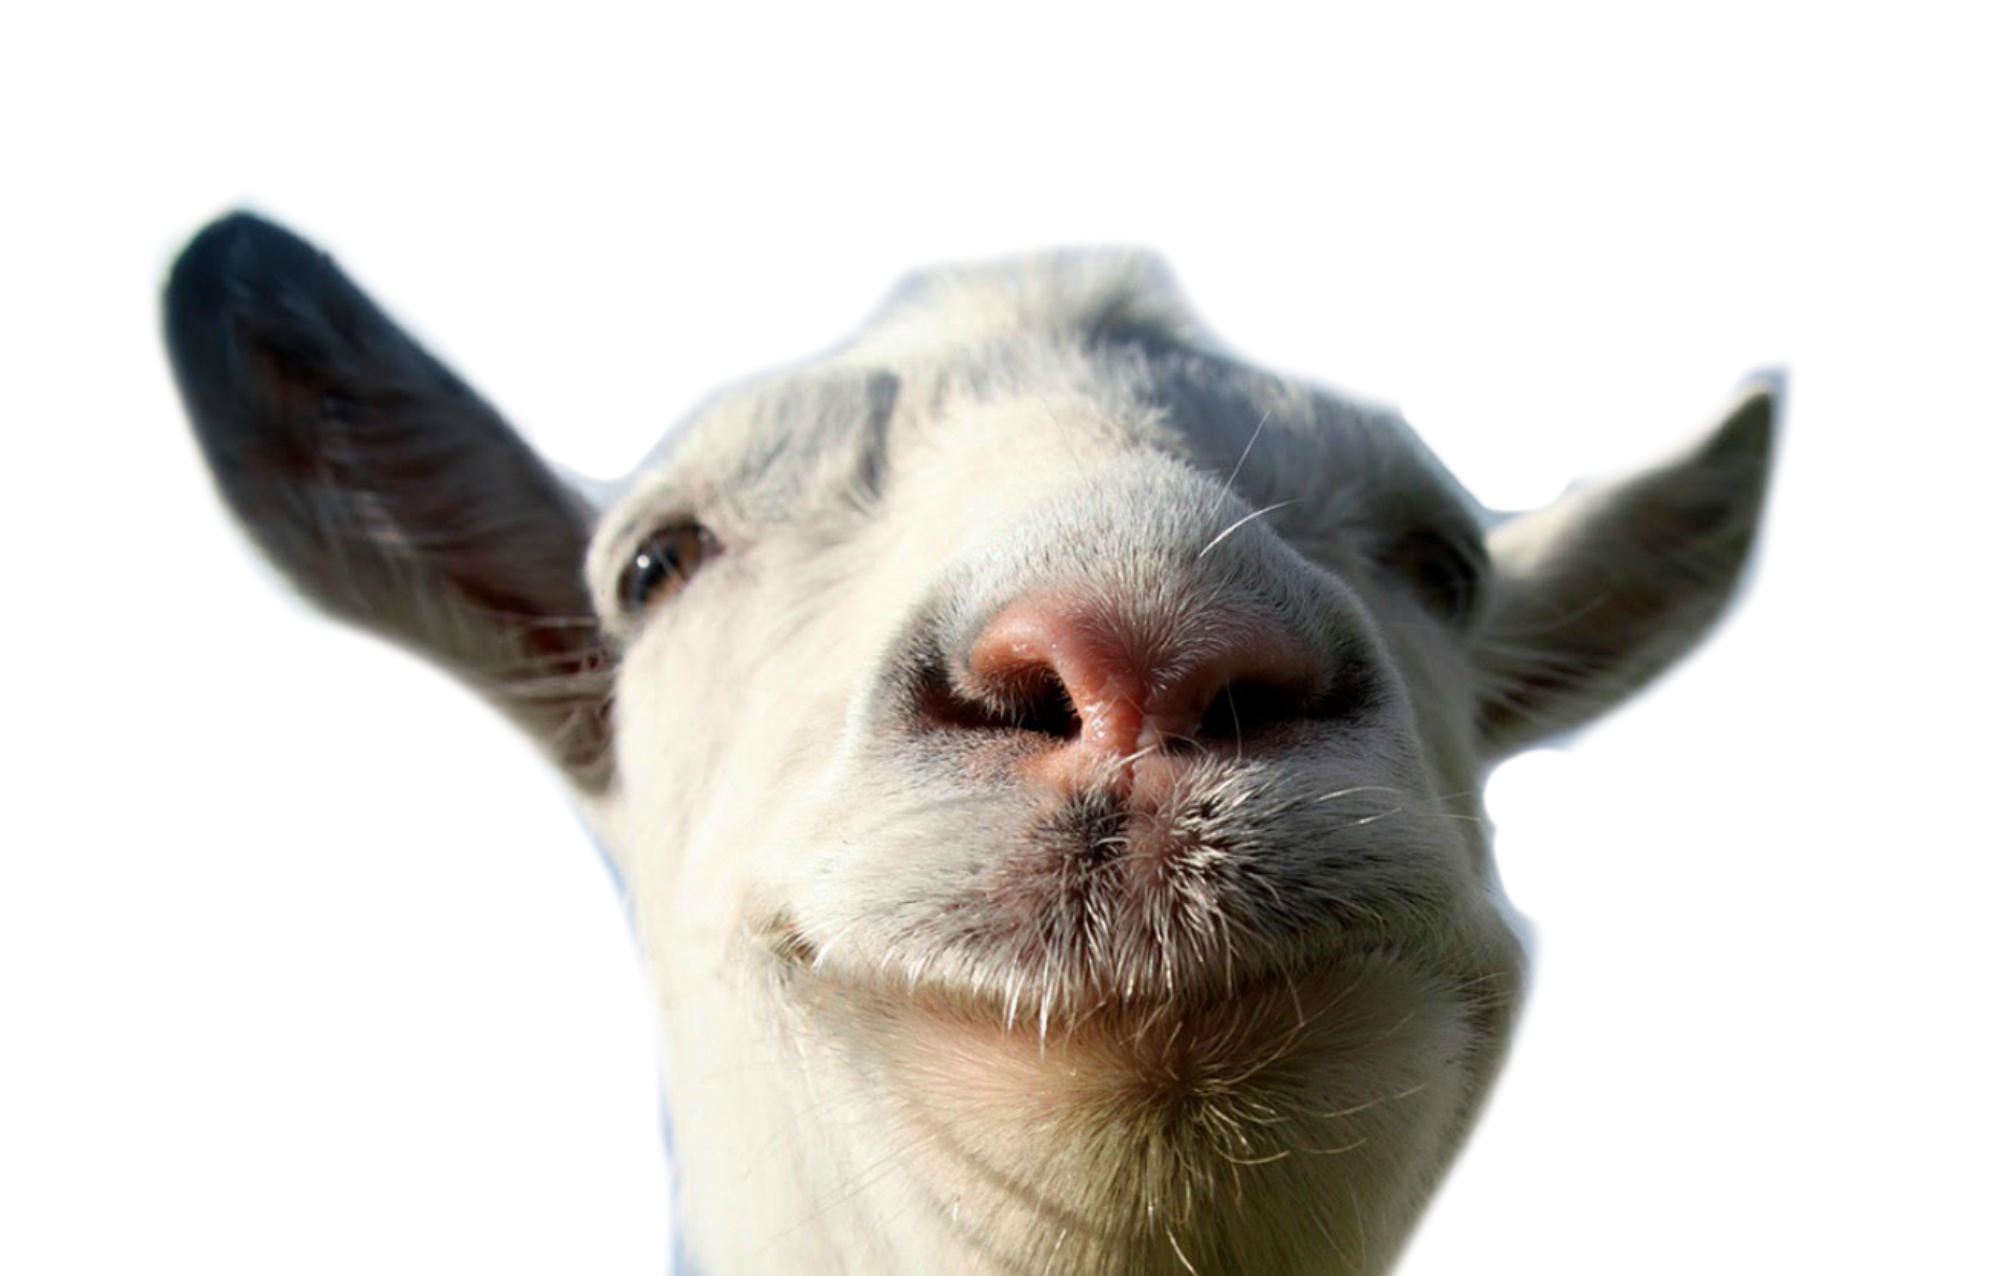 White Goat Download Free Image PNG Image